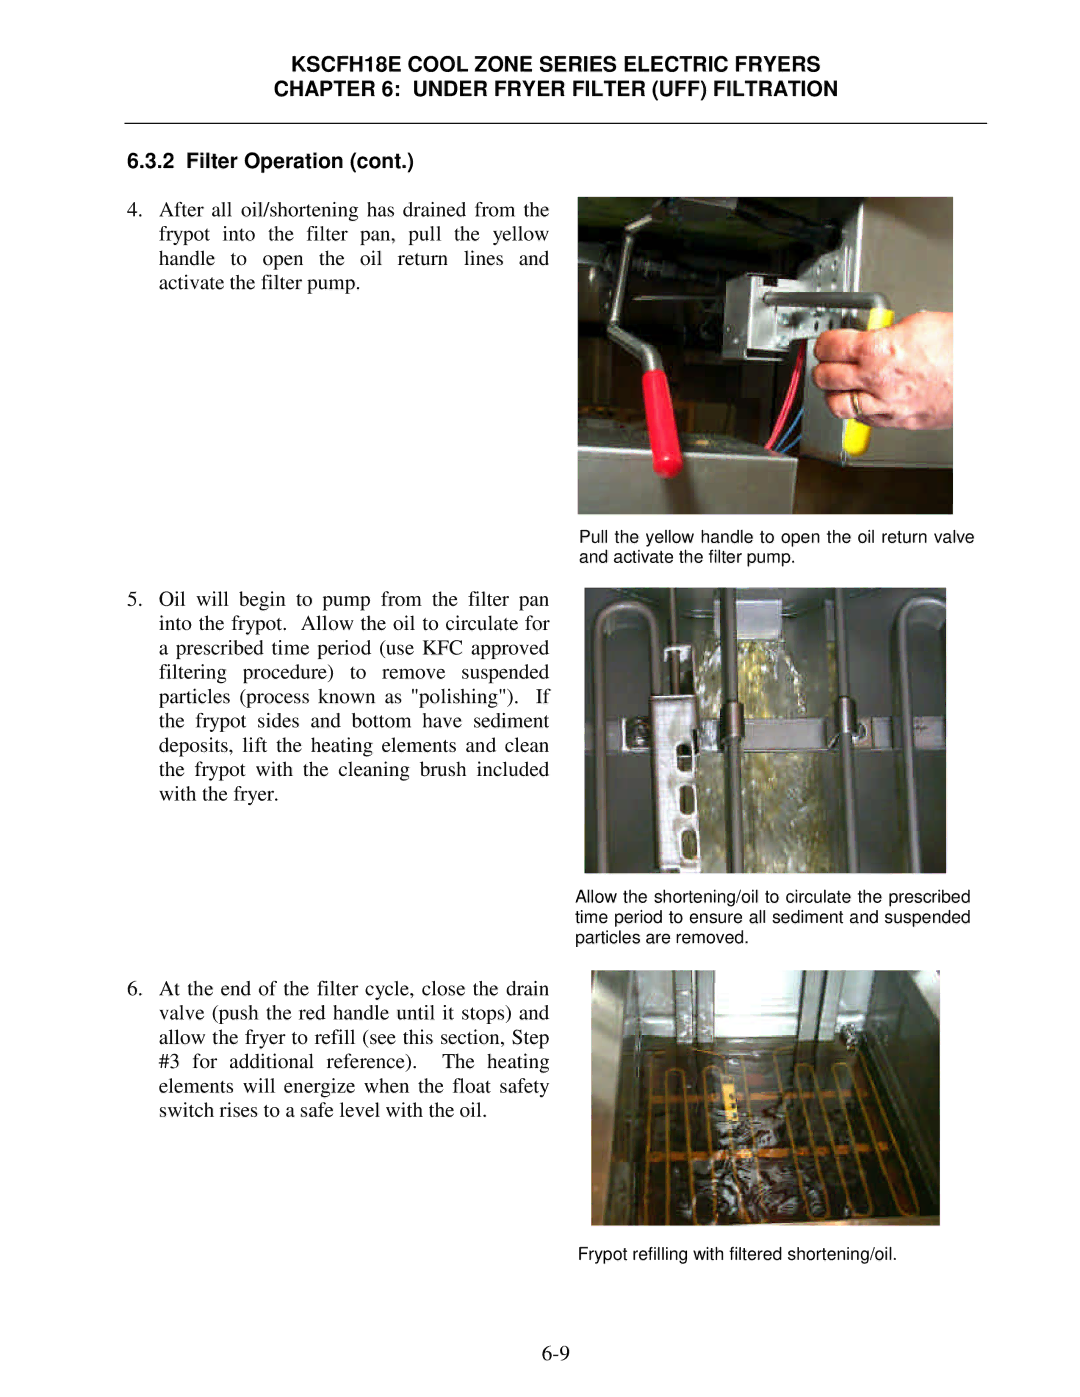 Frymaster KSCFH18E operation manual Frypot refilling with filtered shortening/oil 